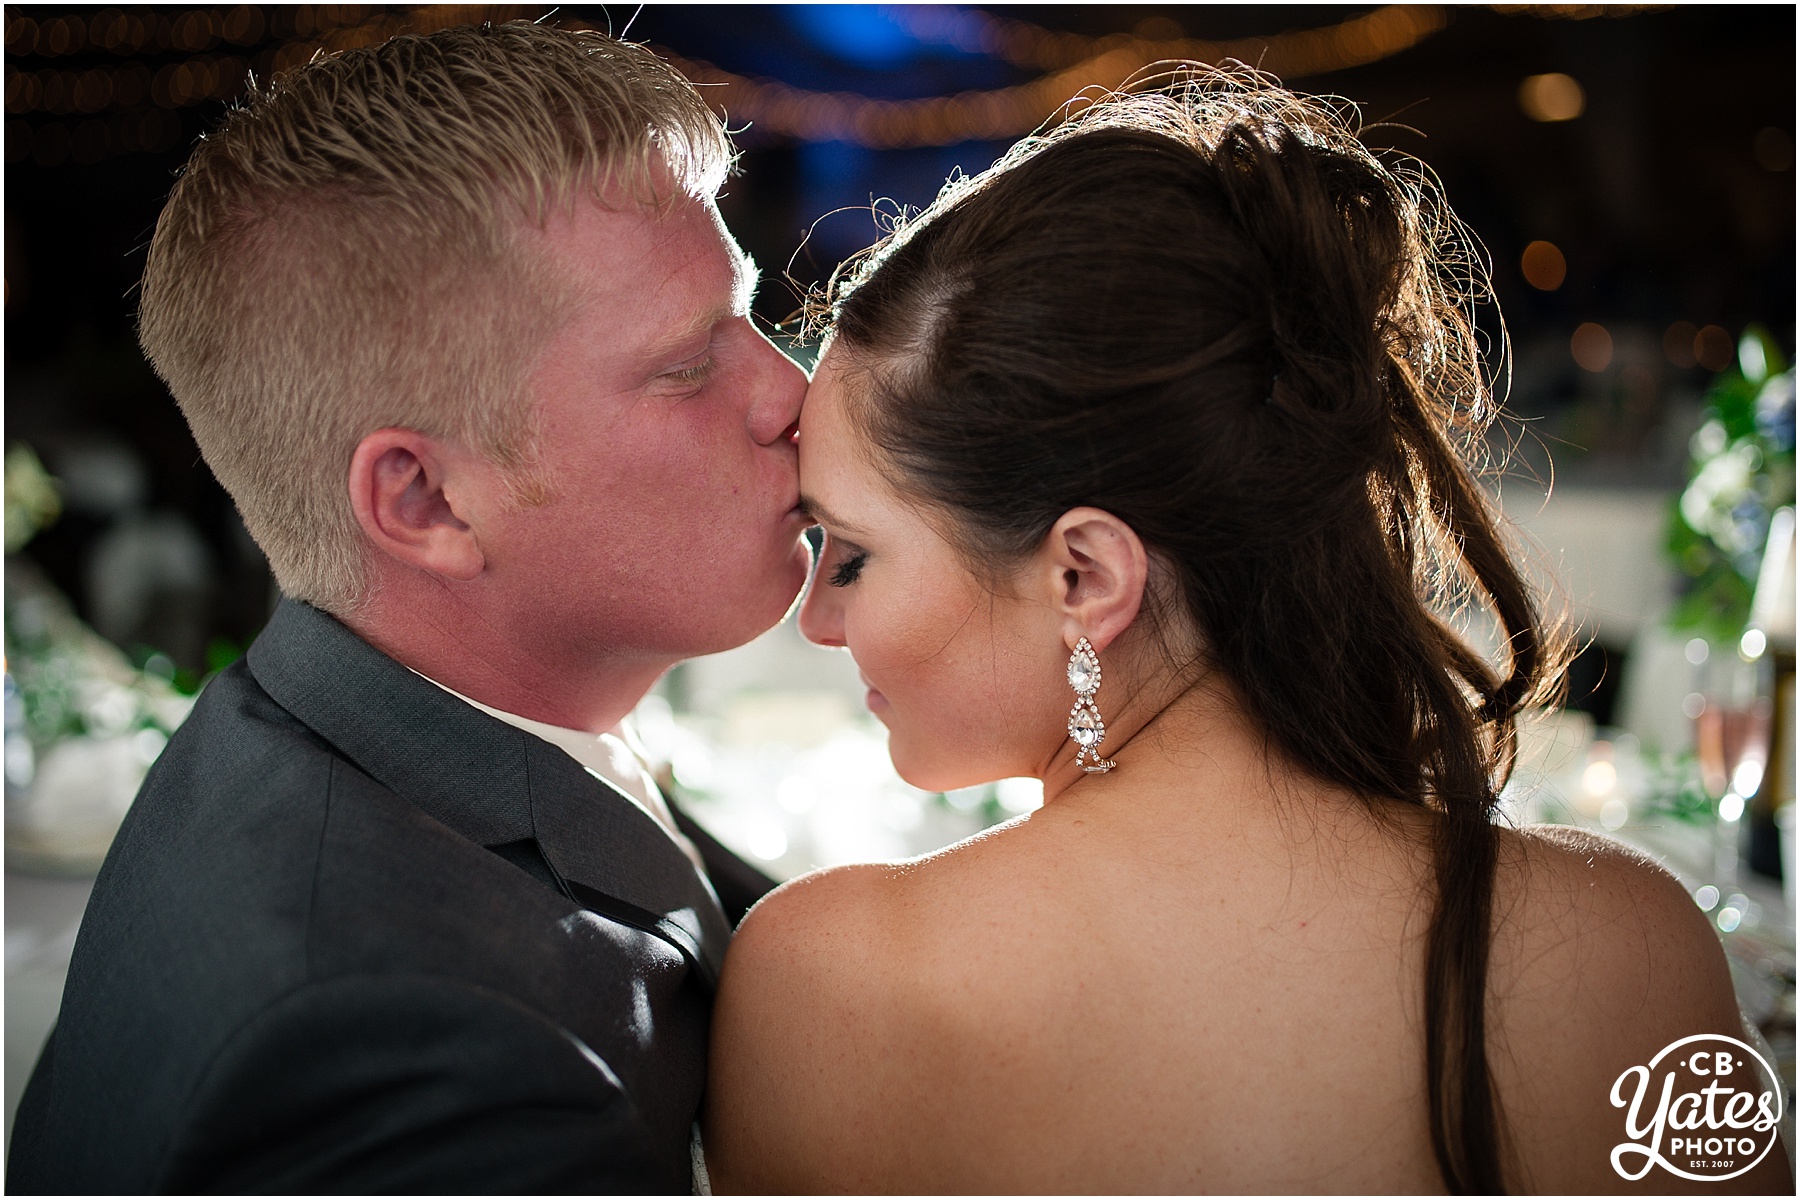 Groom forehead kiss bride photography cb Yates